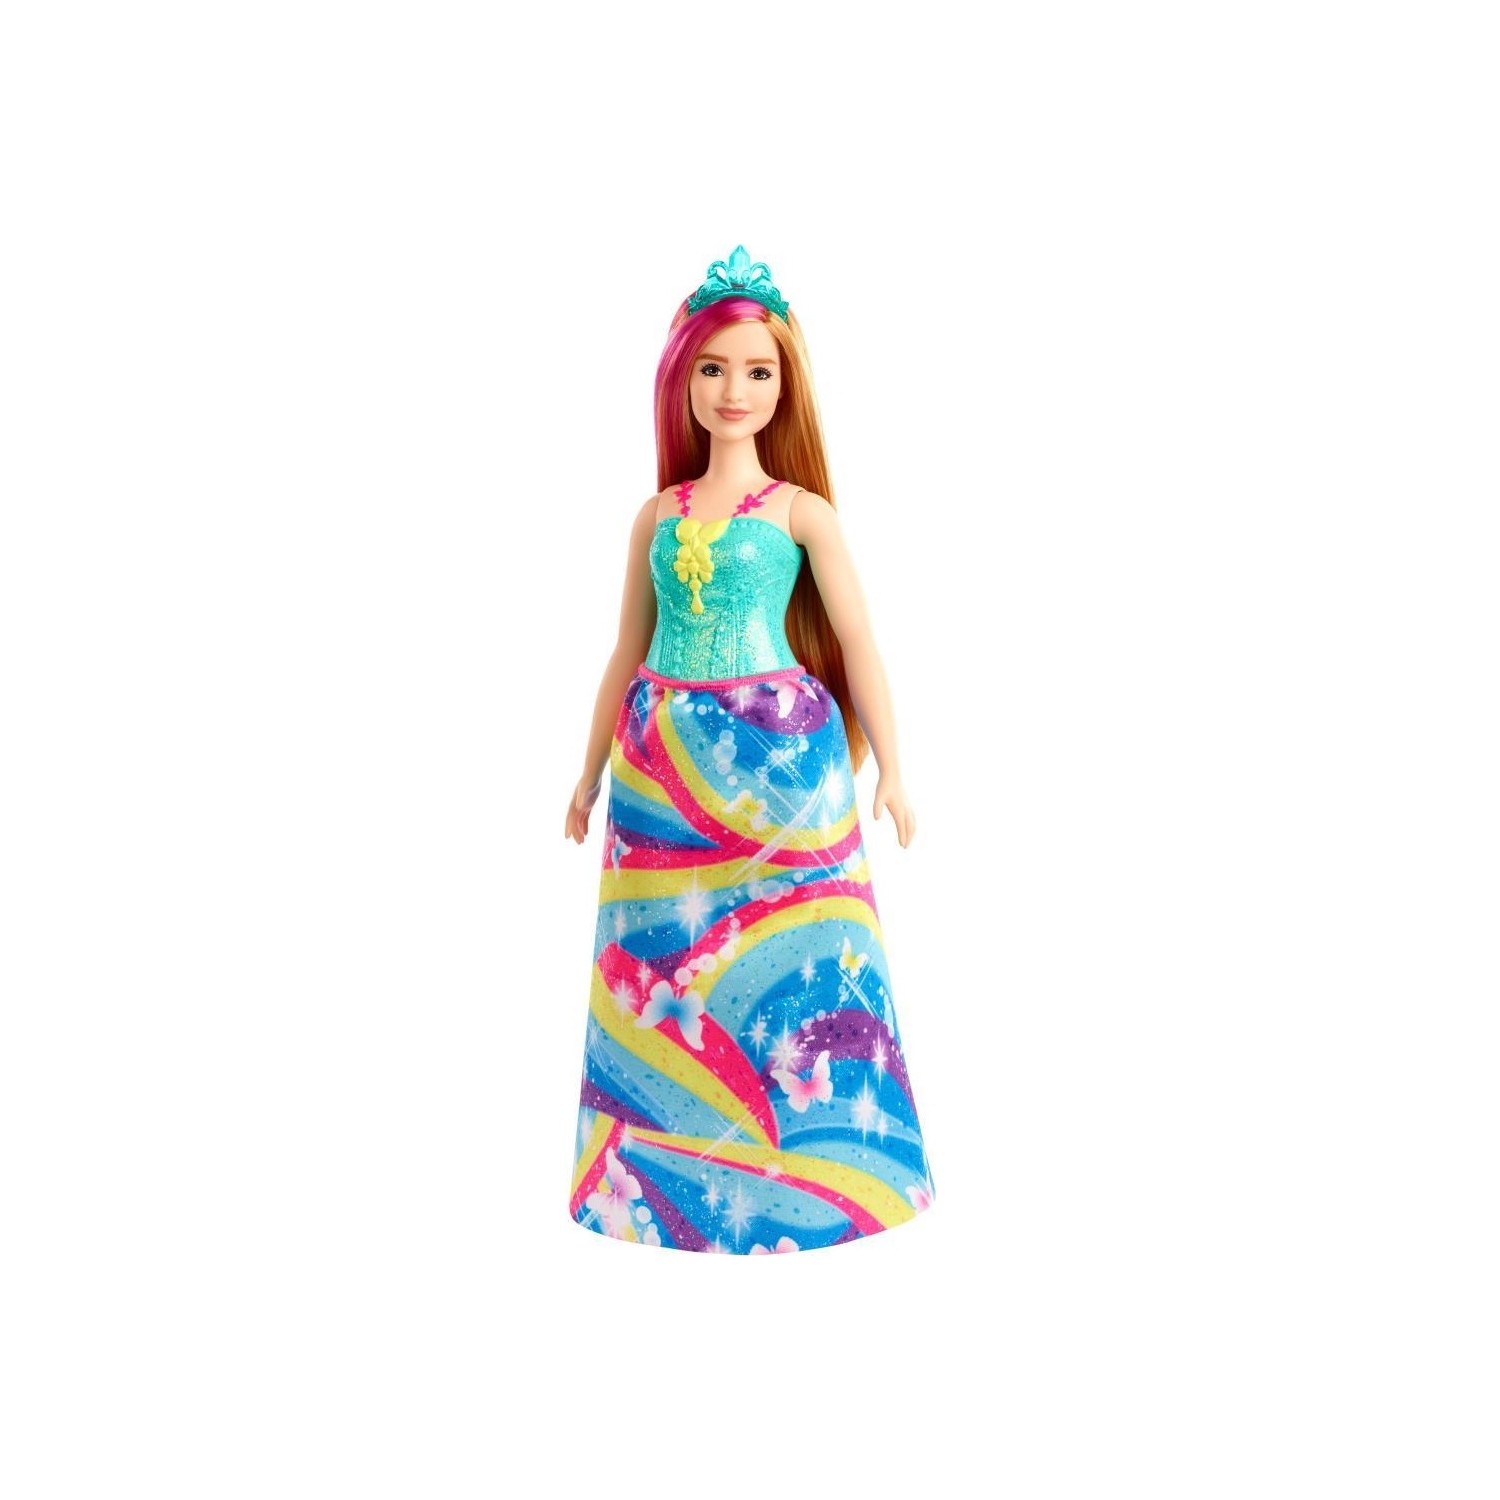 Кукла Barbie Dreamtopia Princess Dolls GJK16 кукла mattel barbie принцесса gjk12 gjk16 рыжая бирюзовый топ